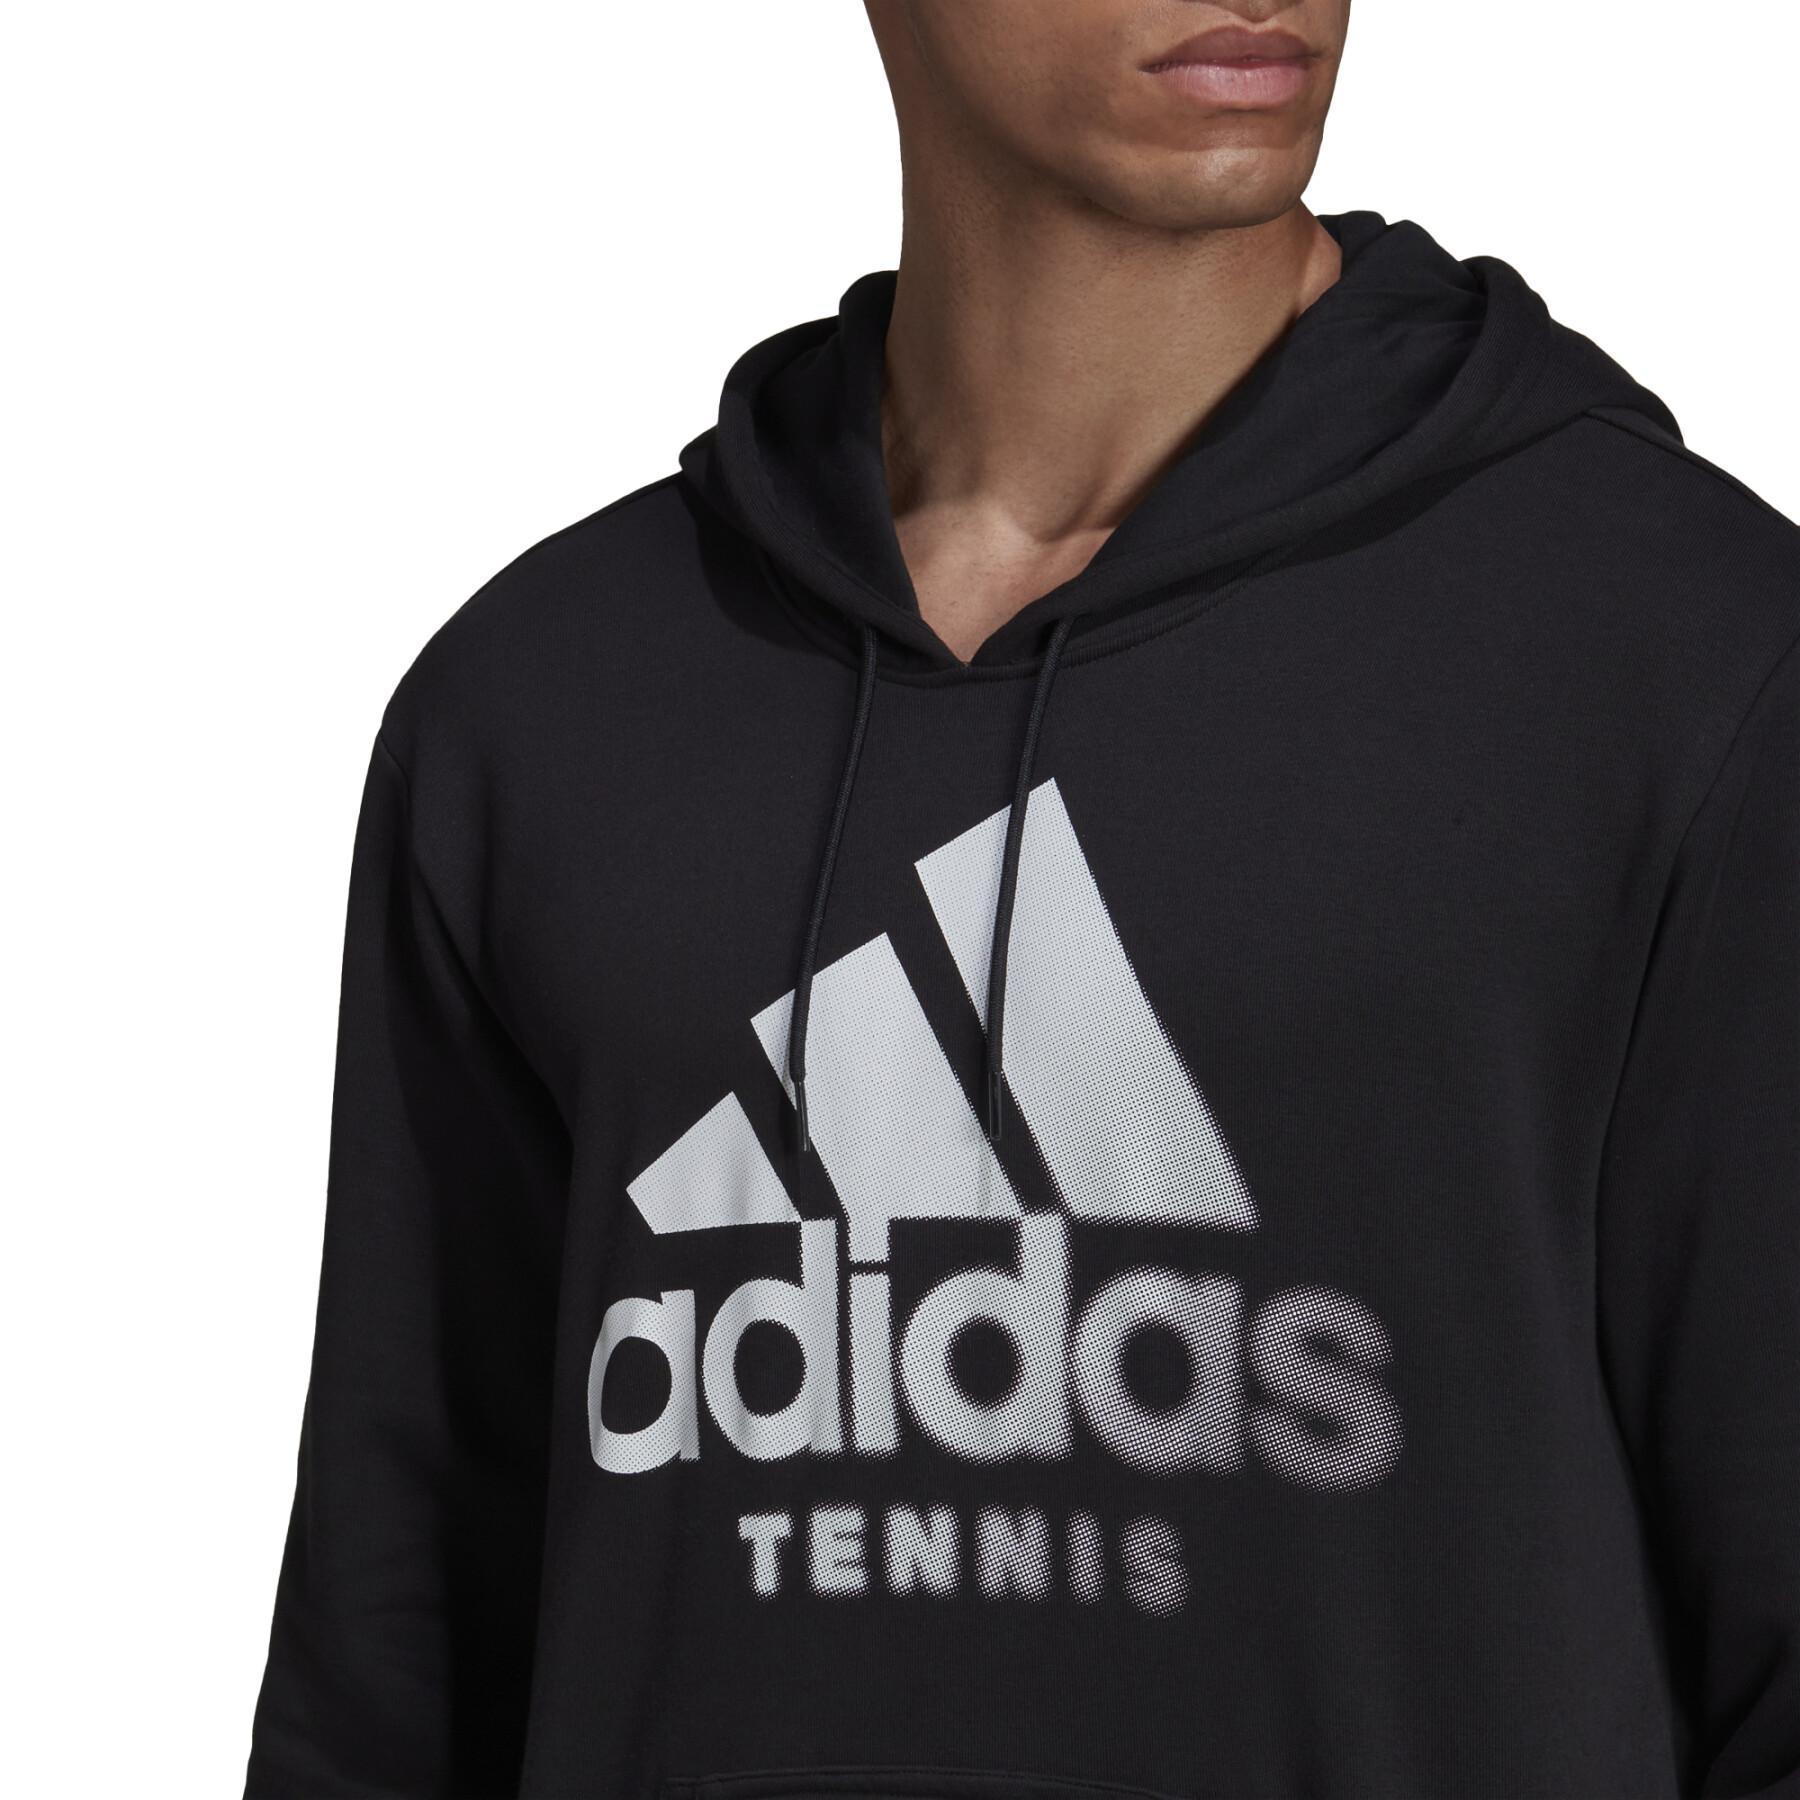 Camisola com capuz adidas Tennis Graphic